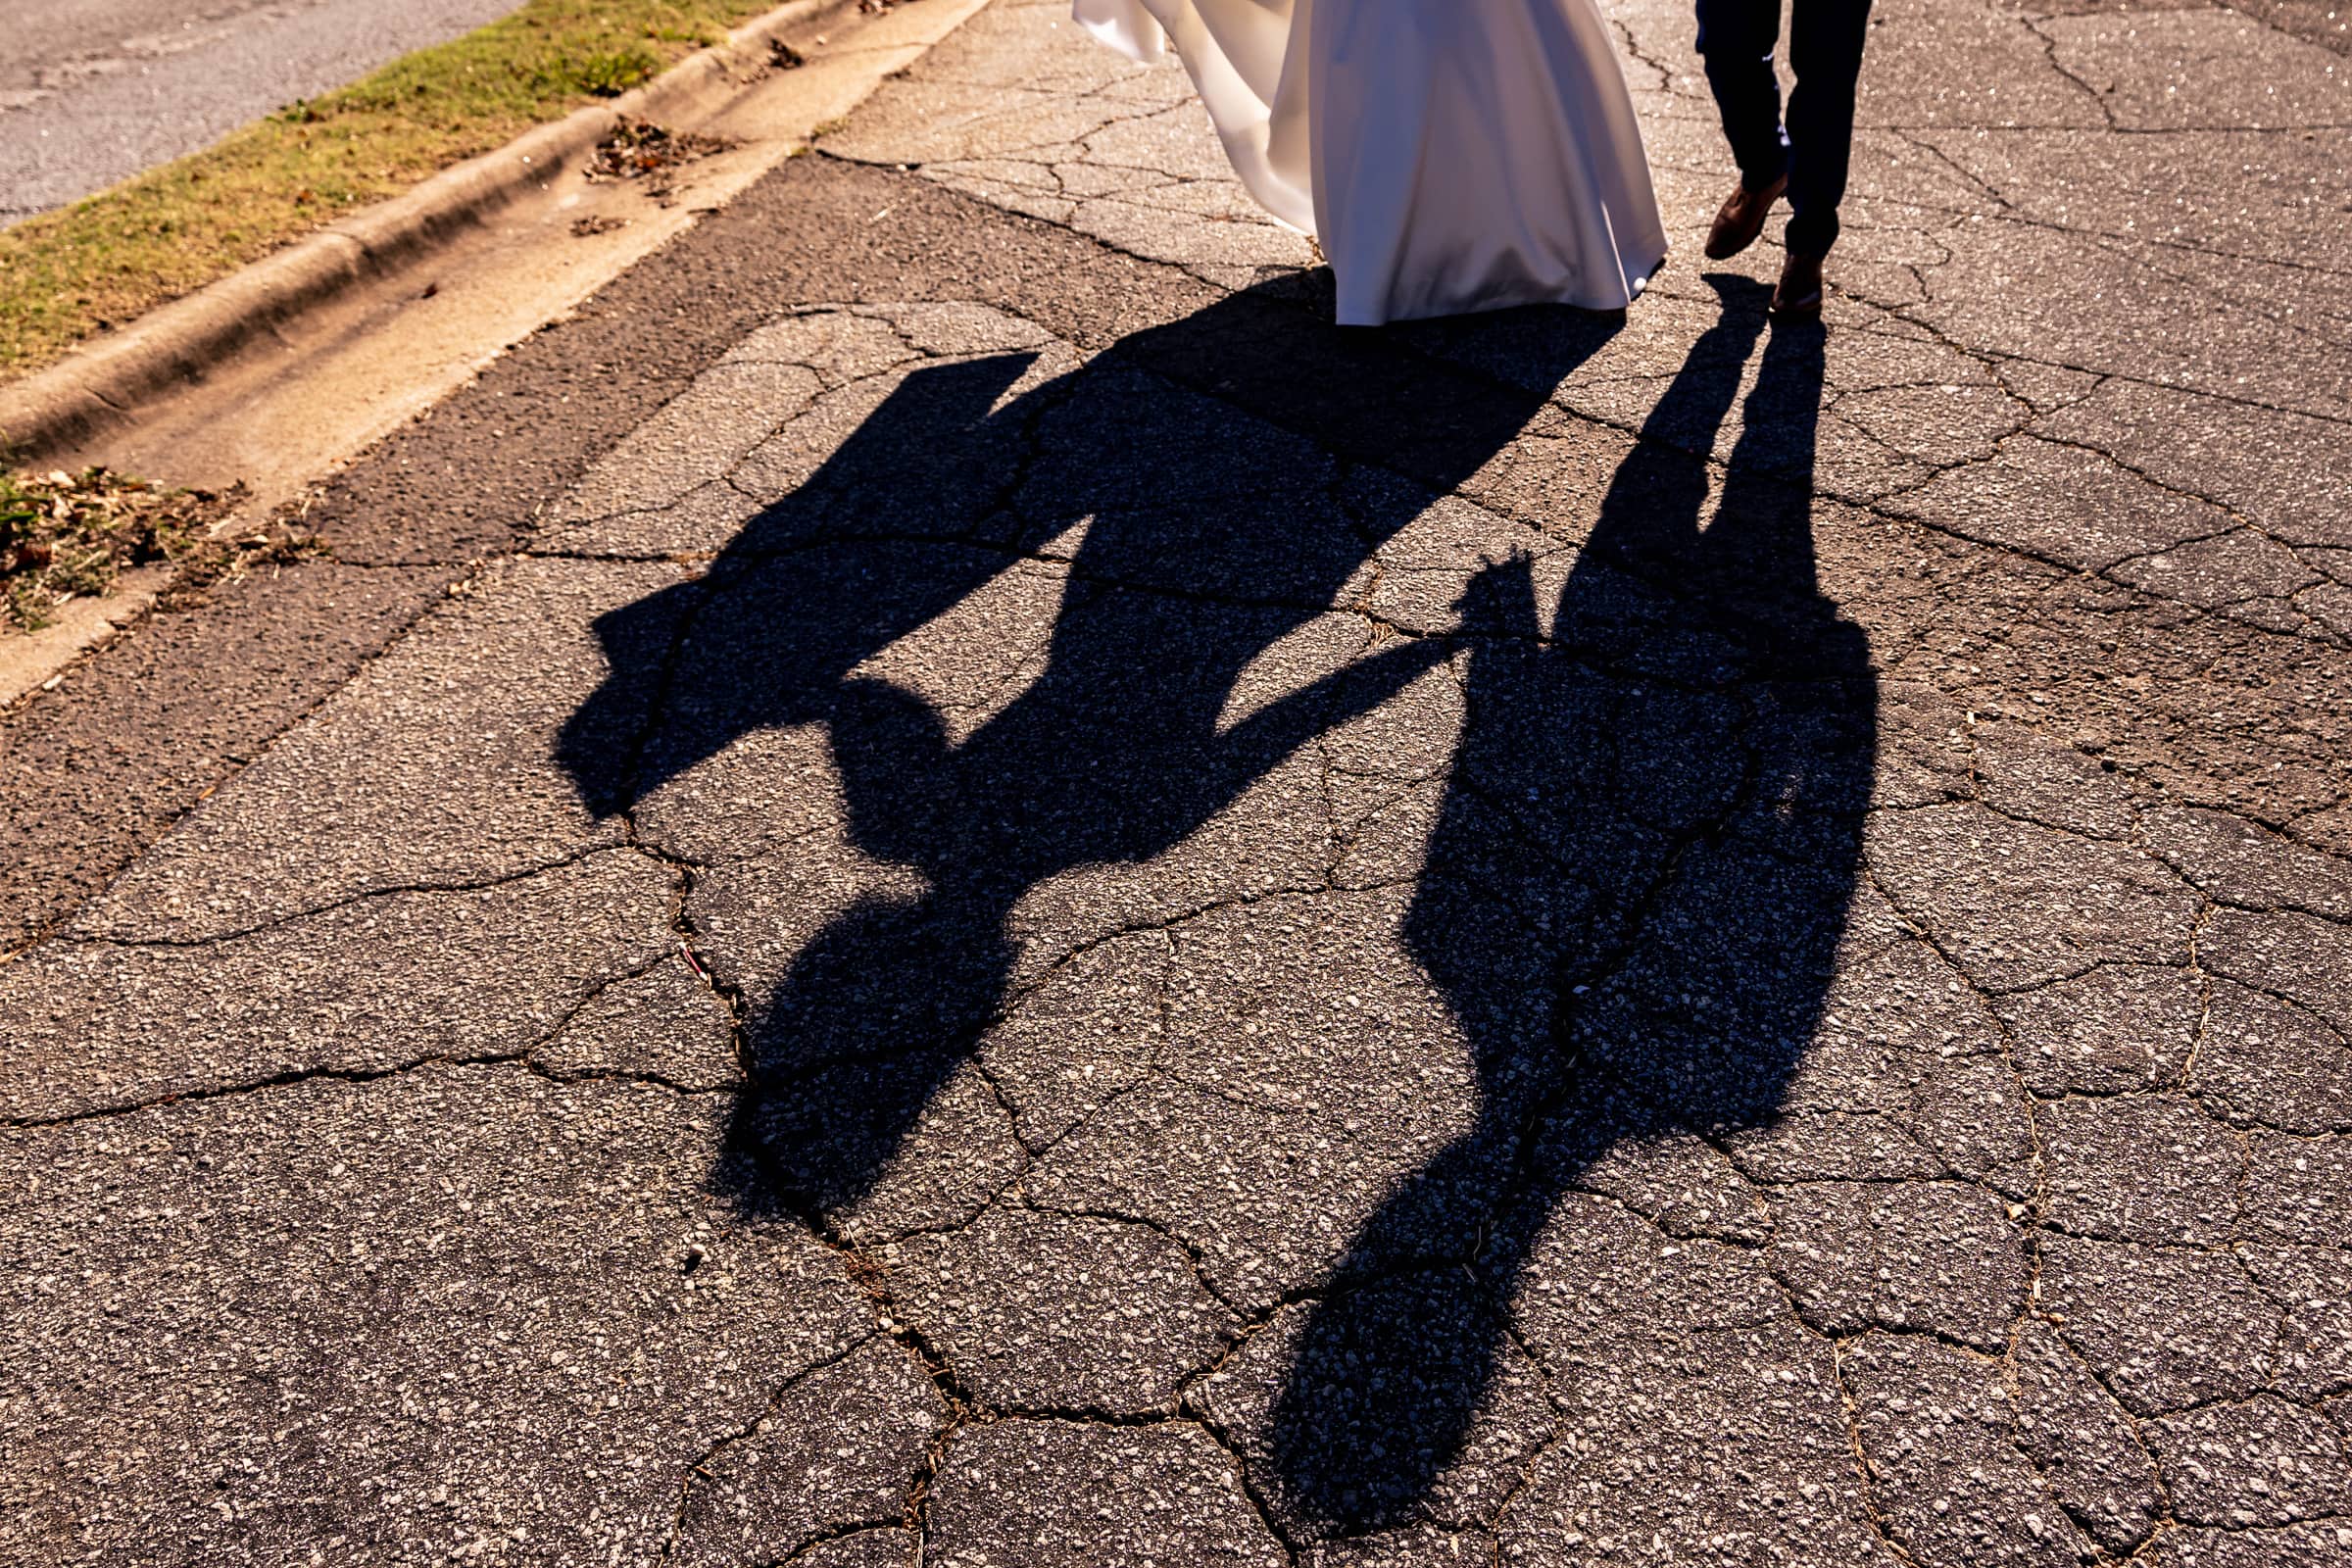 Shadow wedding portrait | photos by Kivus & Camera